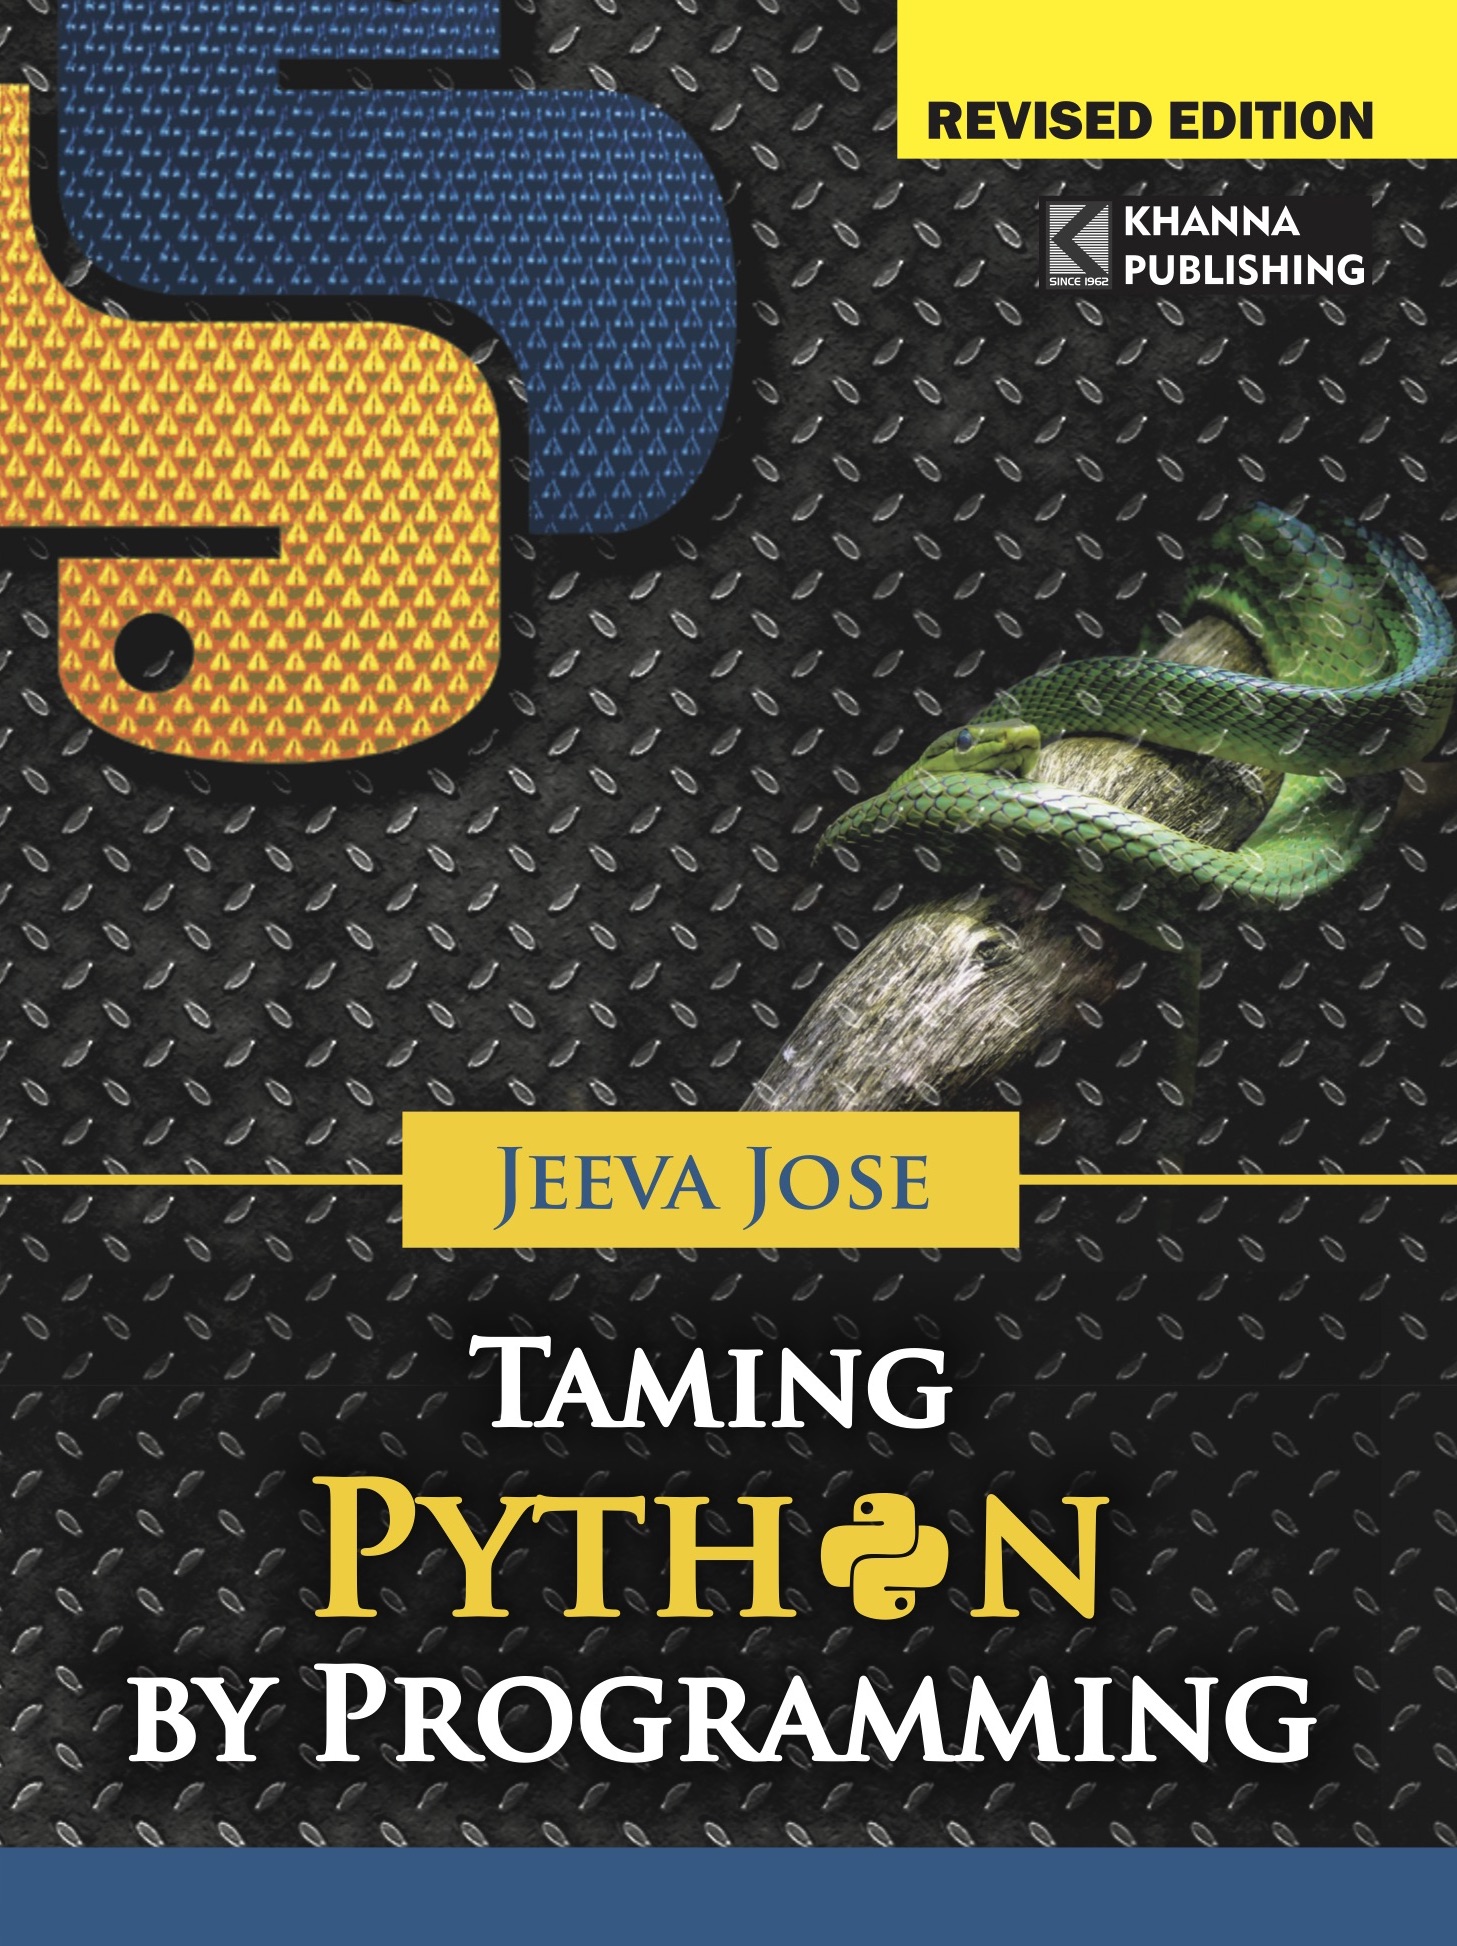 Taming PYTHON By Programming